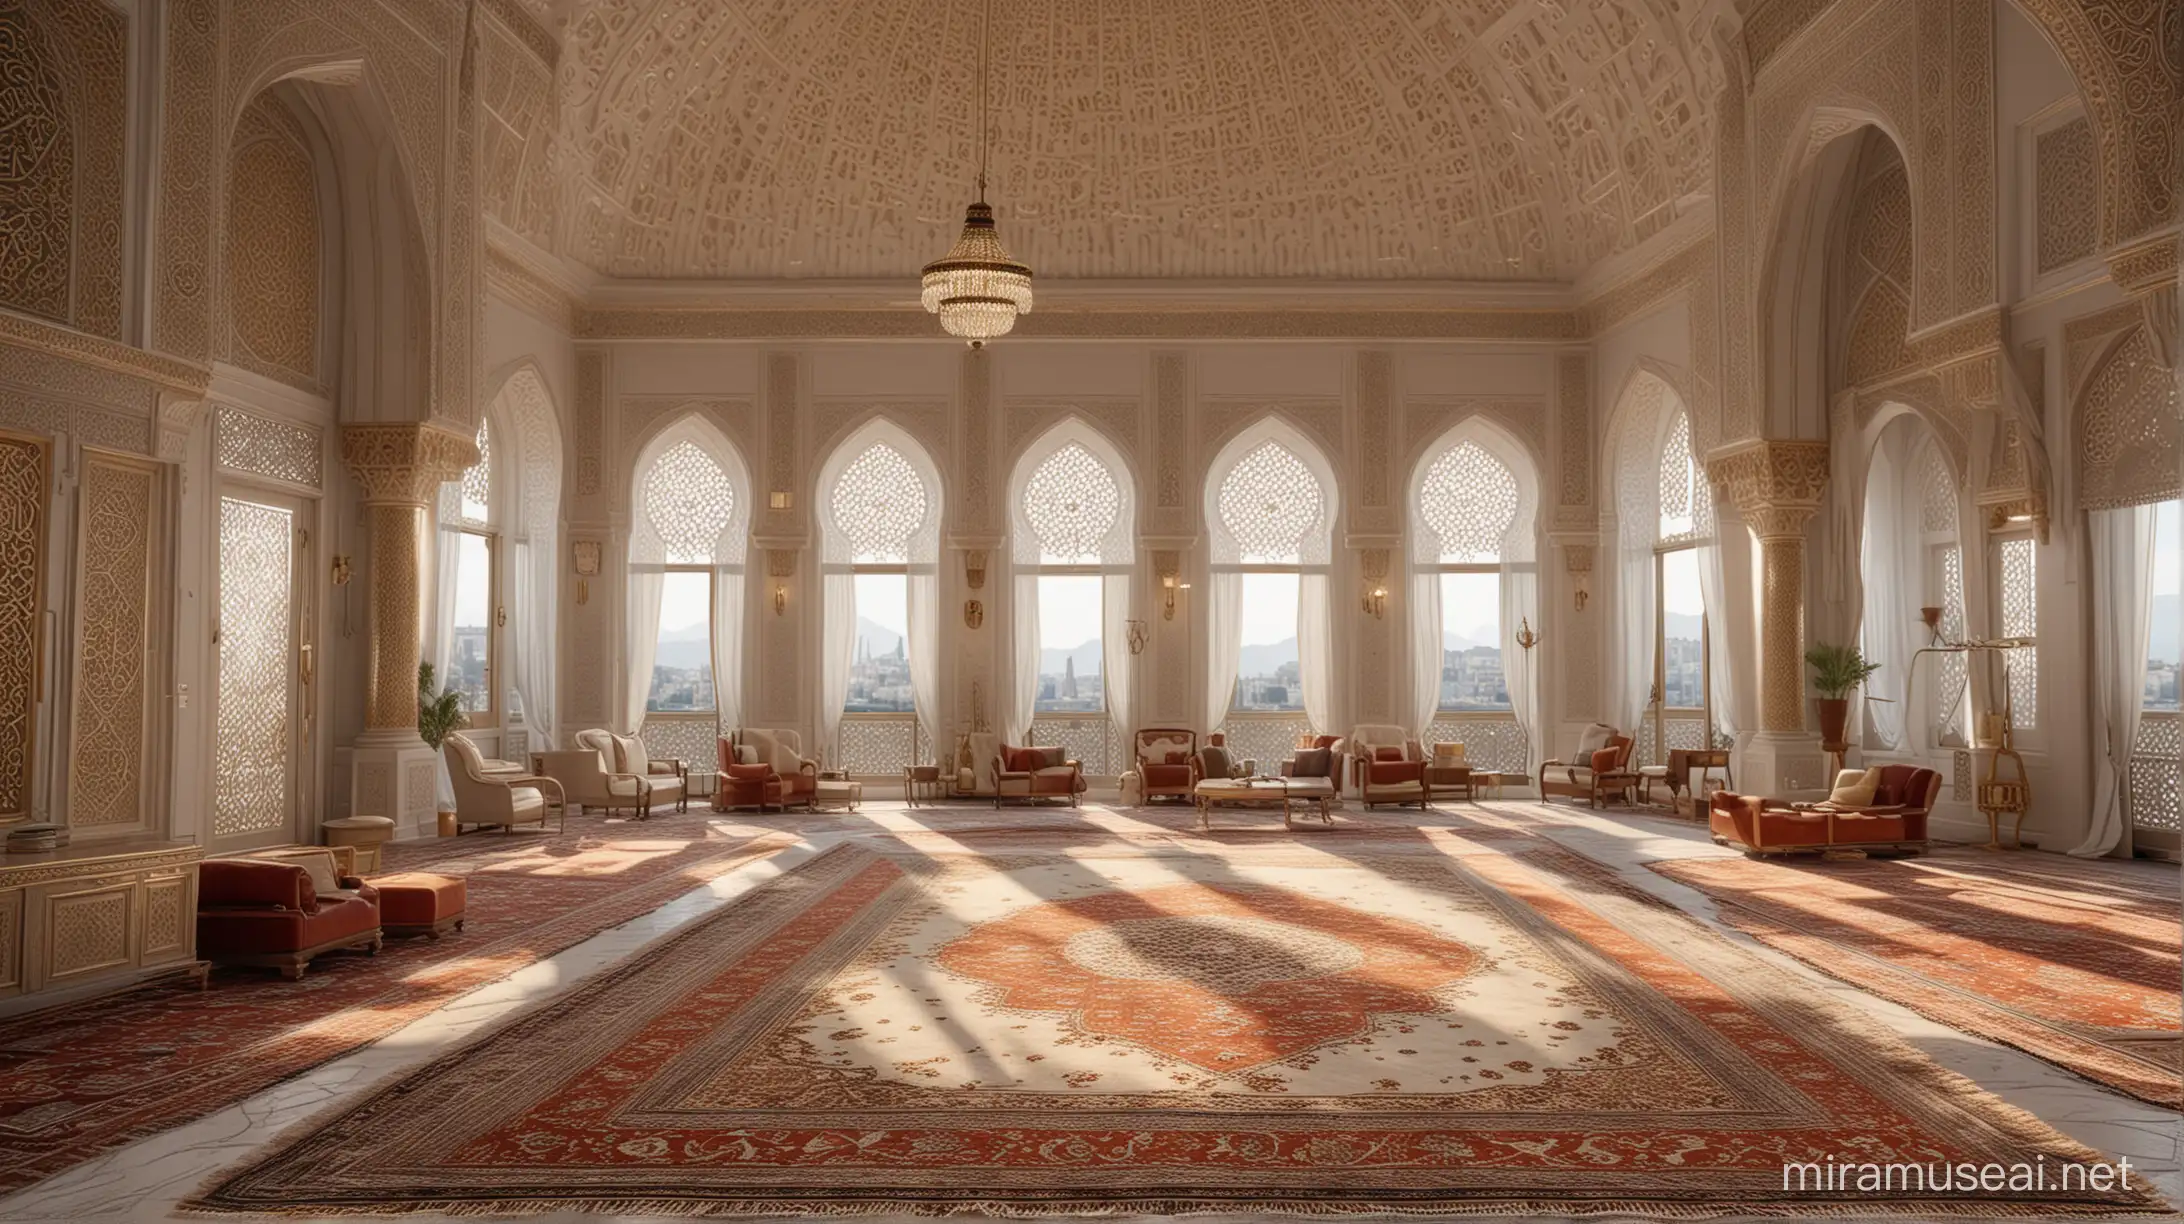 Elegant Mosque Interior Traditional Turkish Motifs and Quran Reading